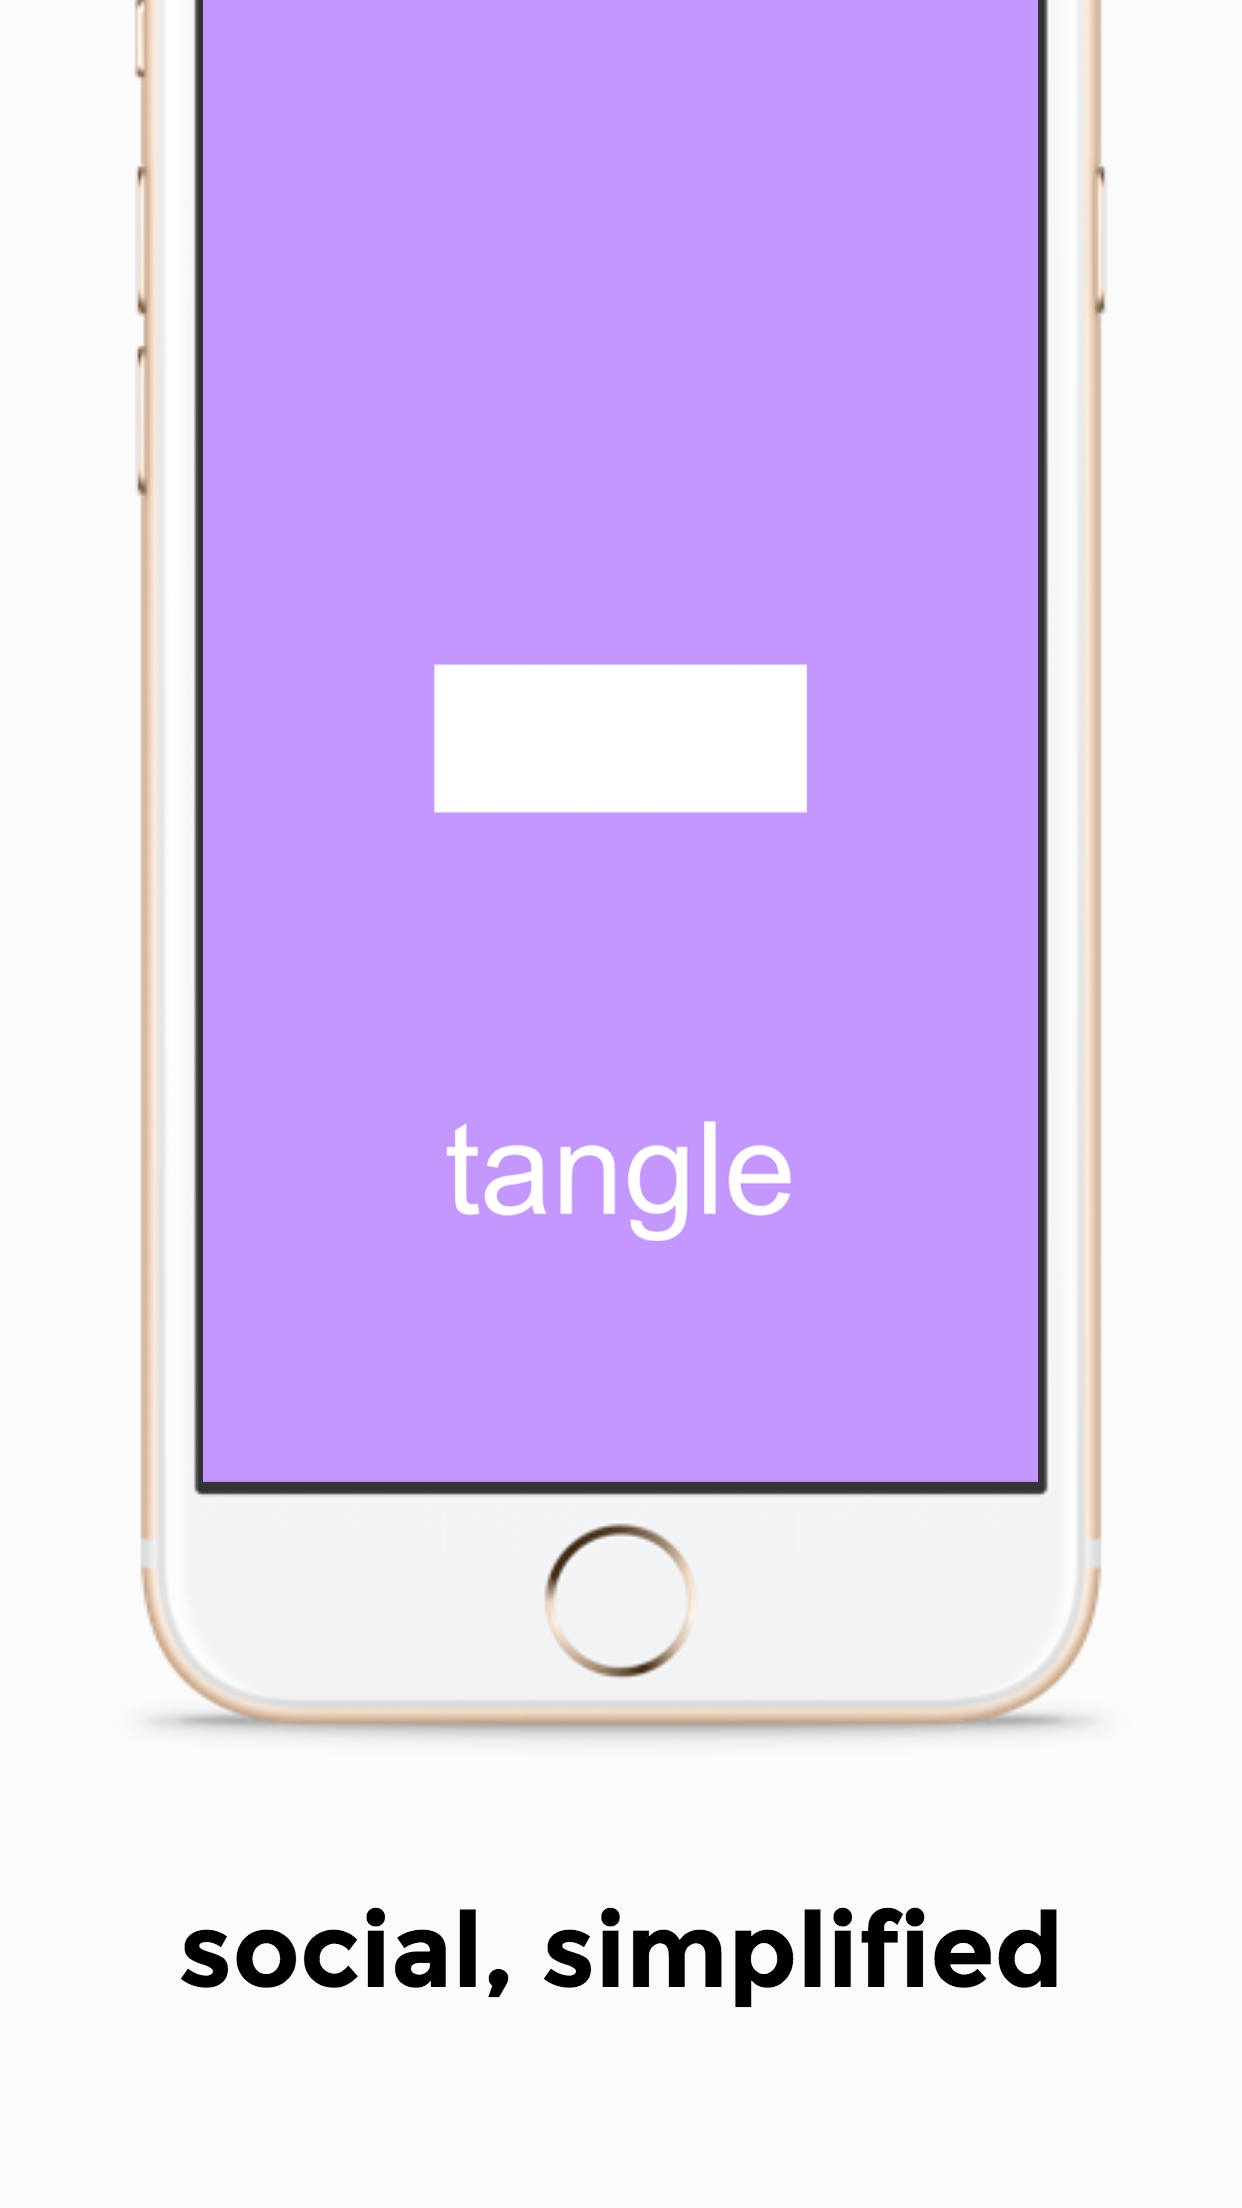 tangle - social made simple